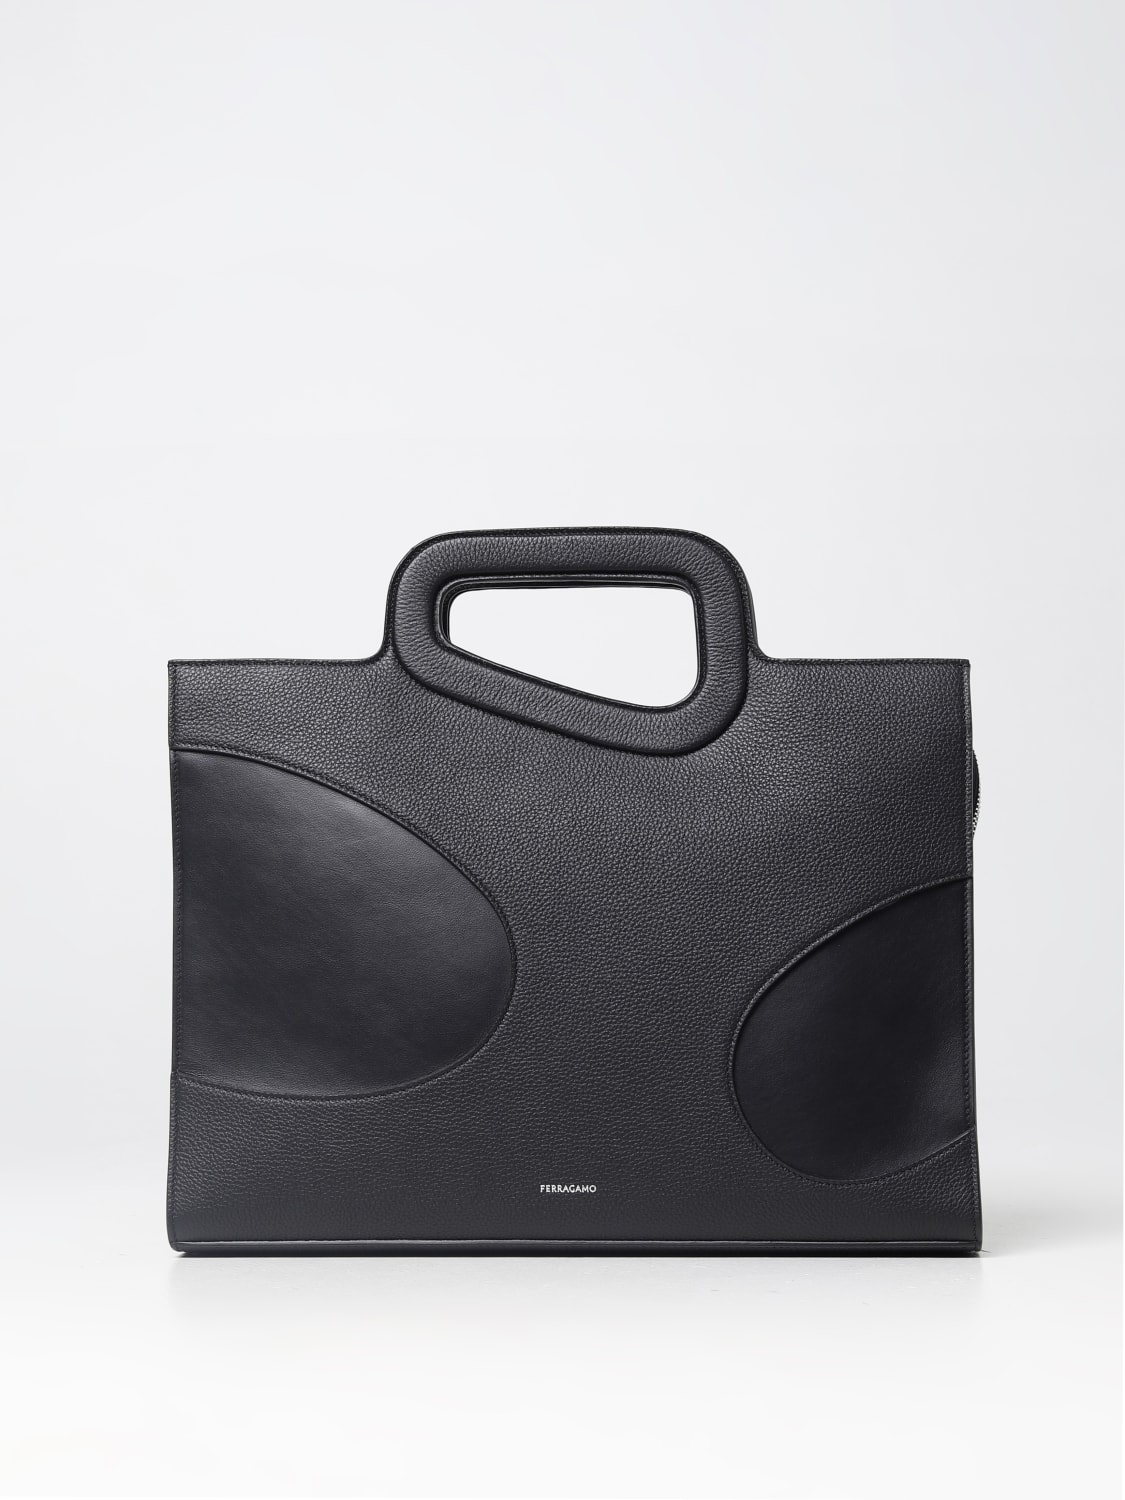 Ombre Louis Vuitton Handbags for Women - Vestiaire Collective